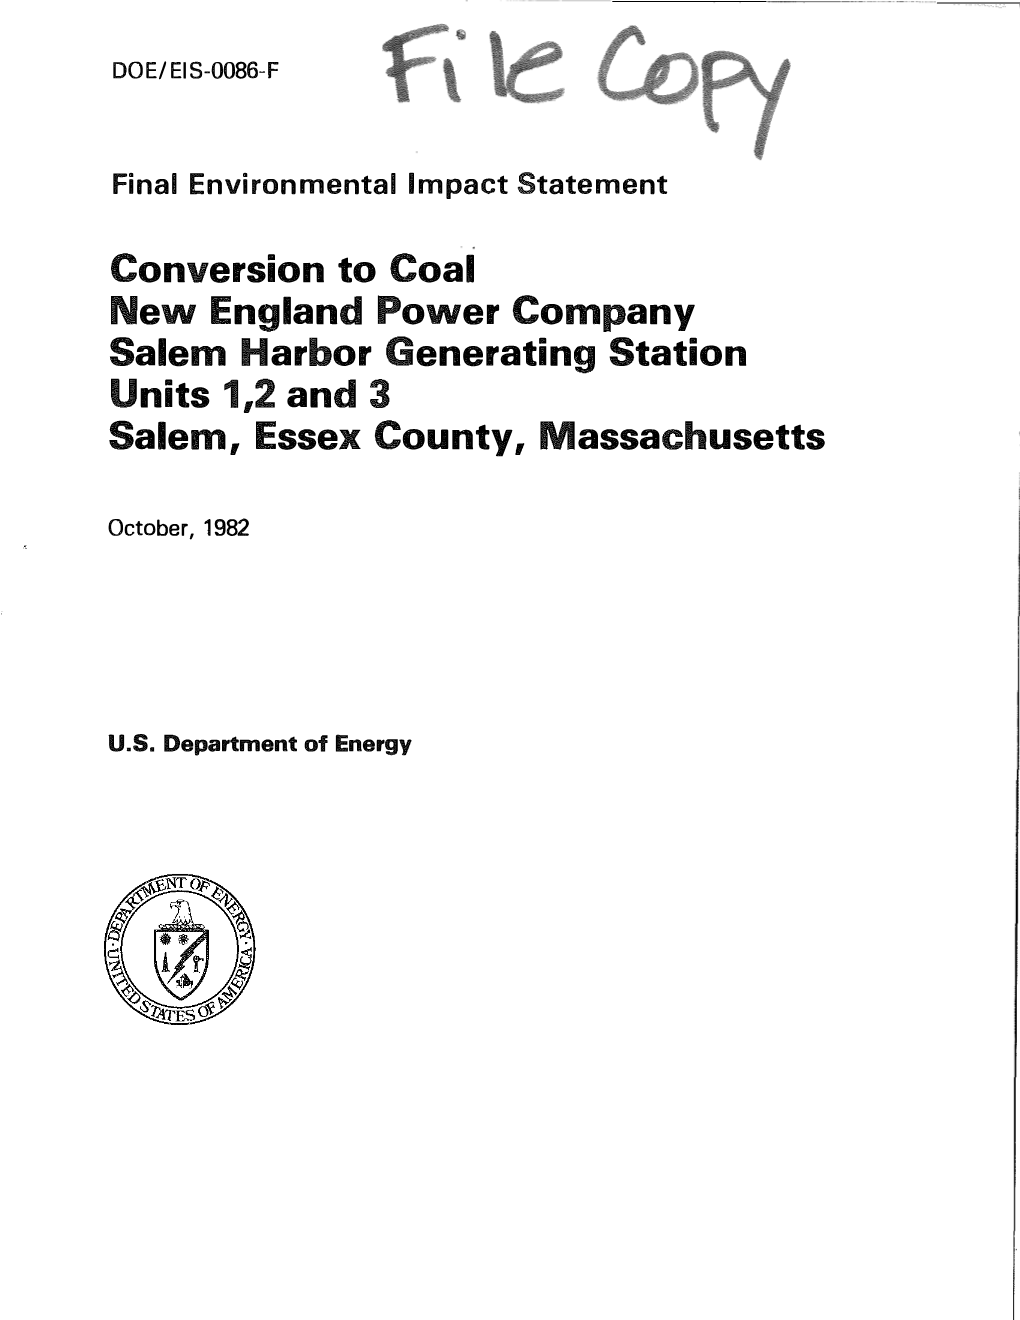 Conversion to Coal New England Power Company Salem Harbor Generating Station Units 1,2 and 3 Salem, Essex County, Massachusetts